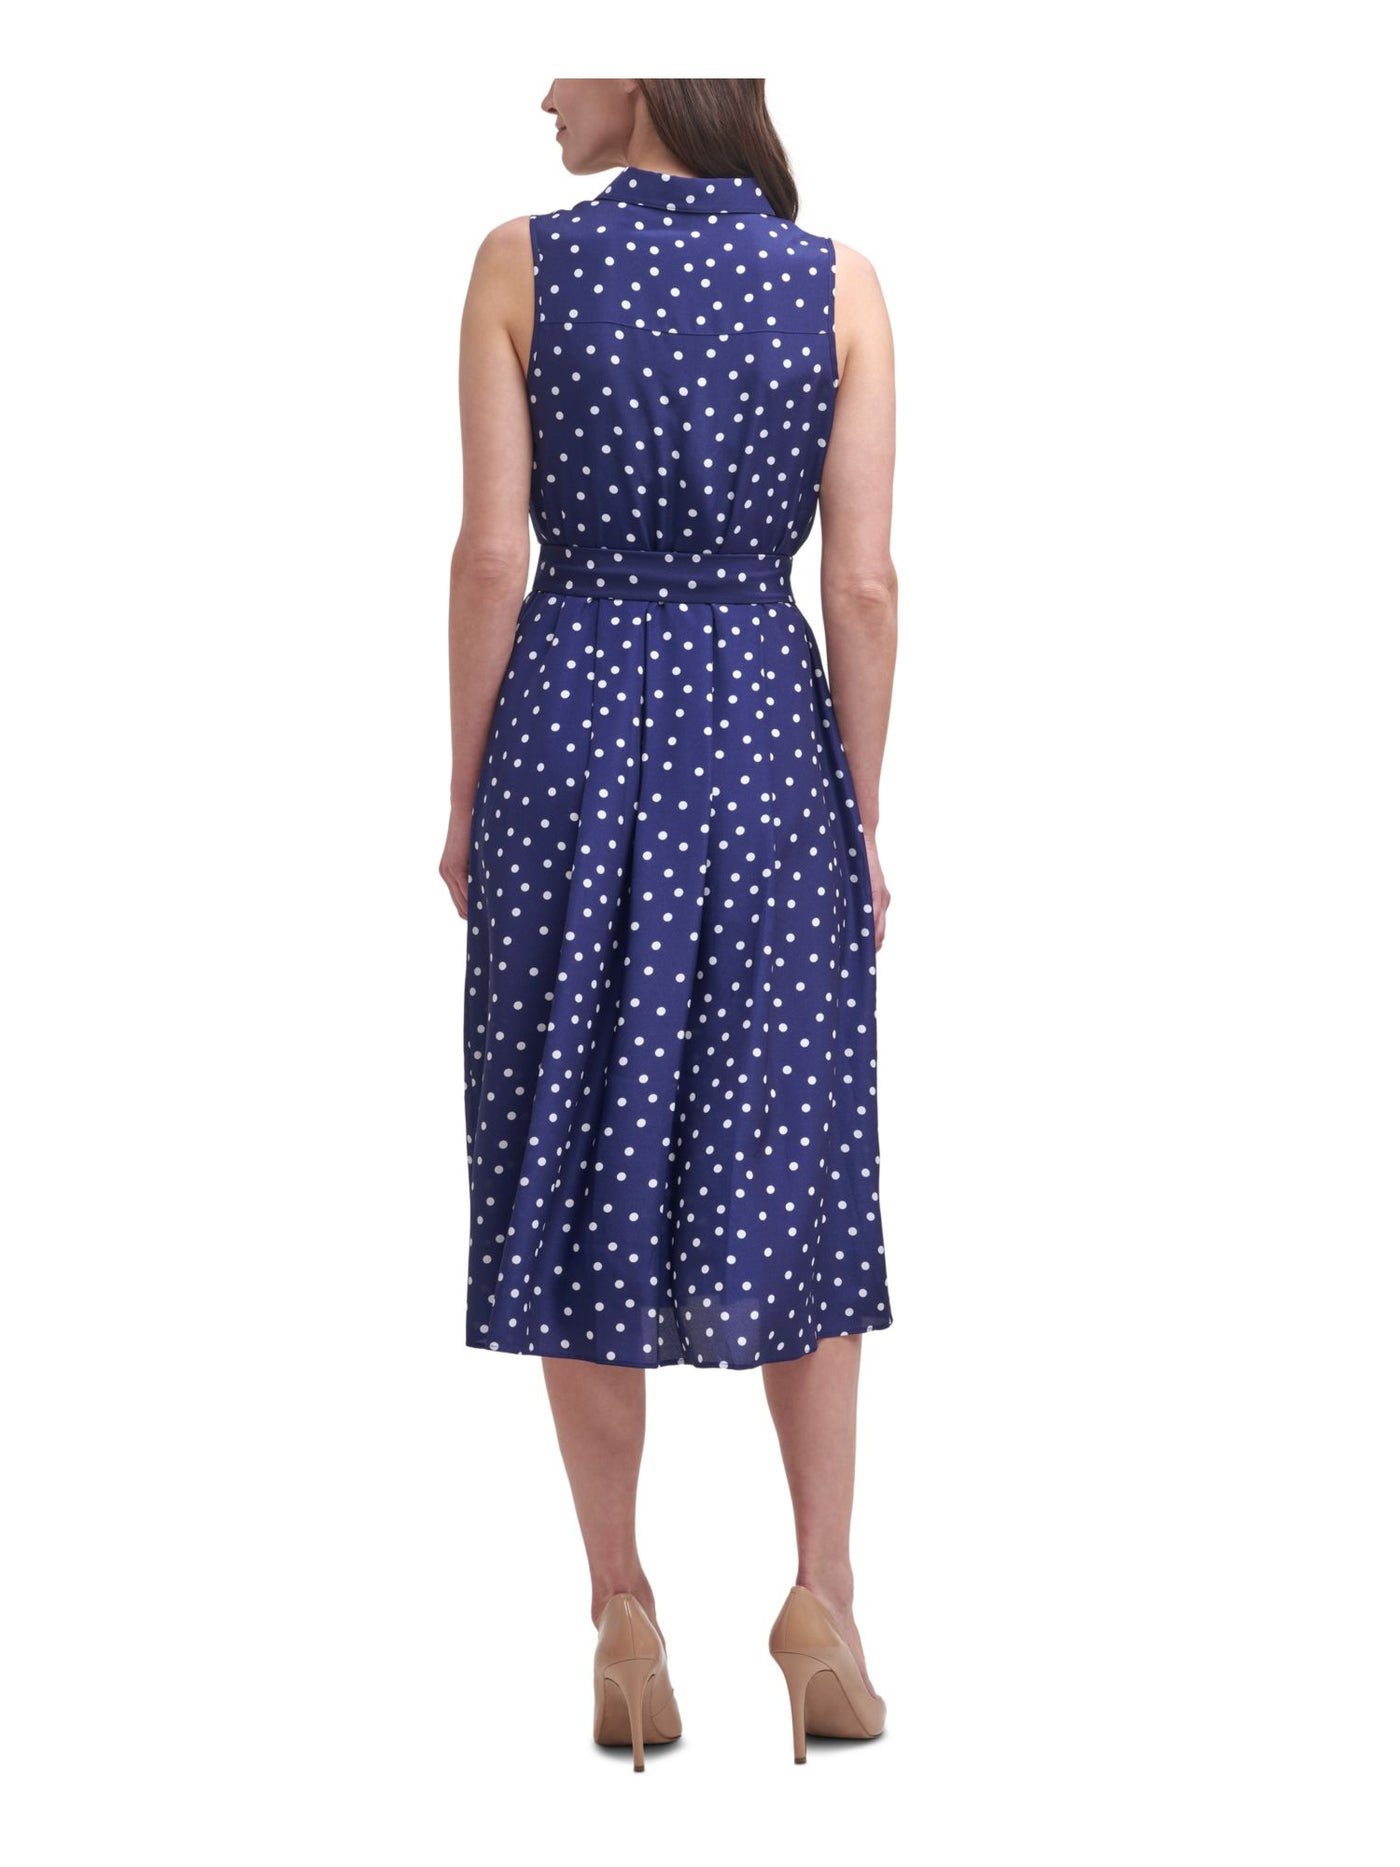 HARPER ROSE Womens Blue Zippered Pocketed Belted Polka Dot Sleeveless Point Collar Midi Wear To Work Shirt Dress 14